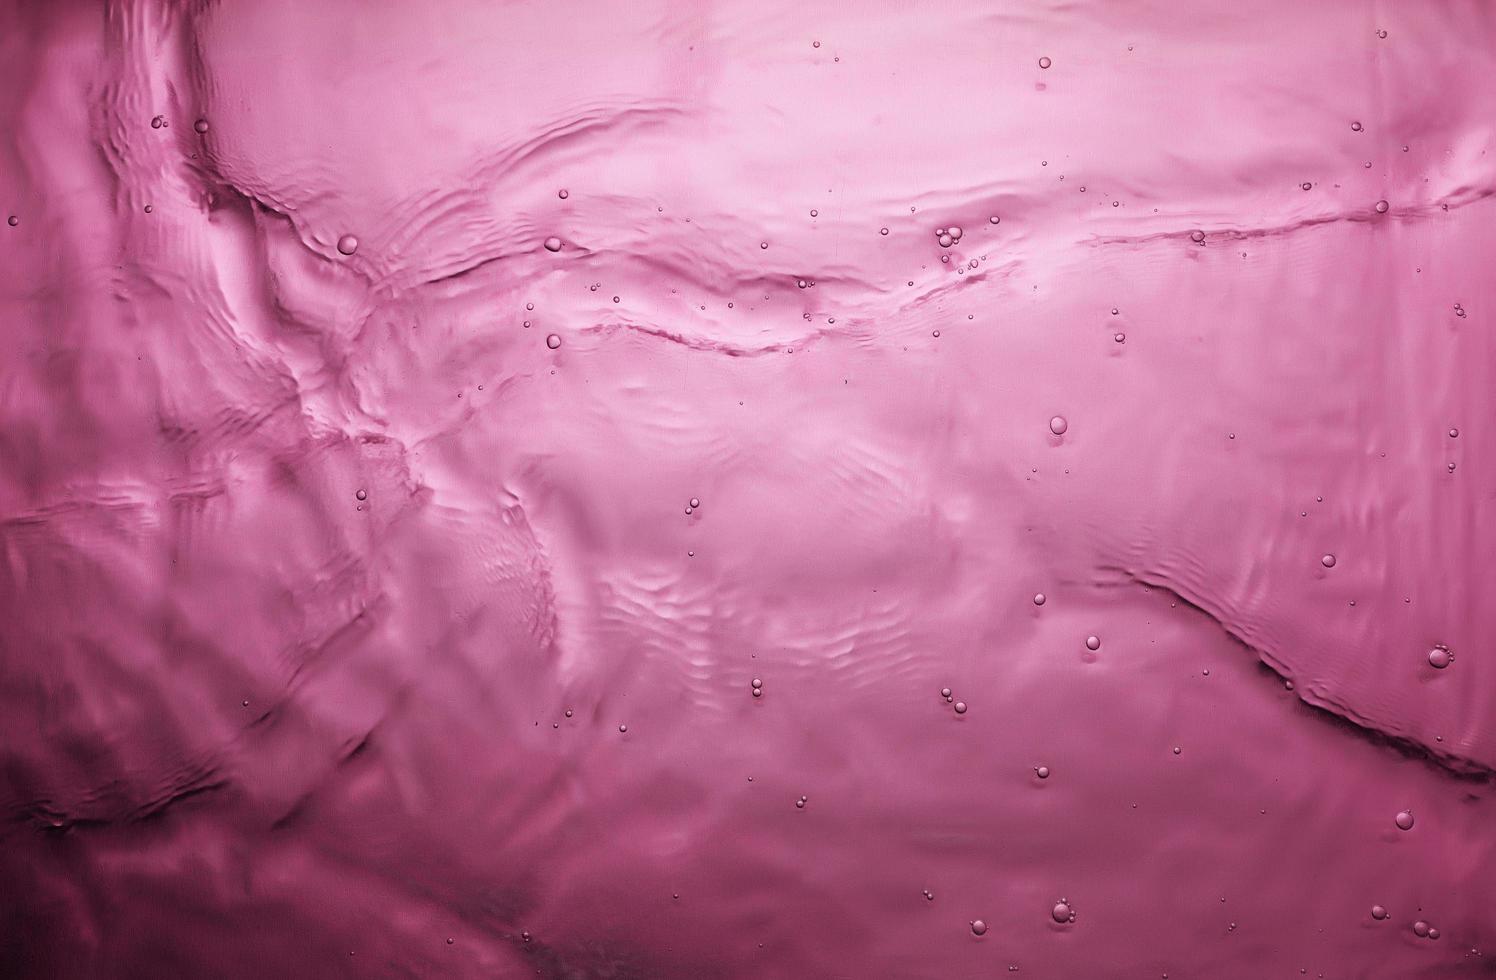 texture of splashing water on pink background photo